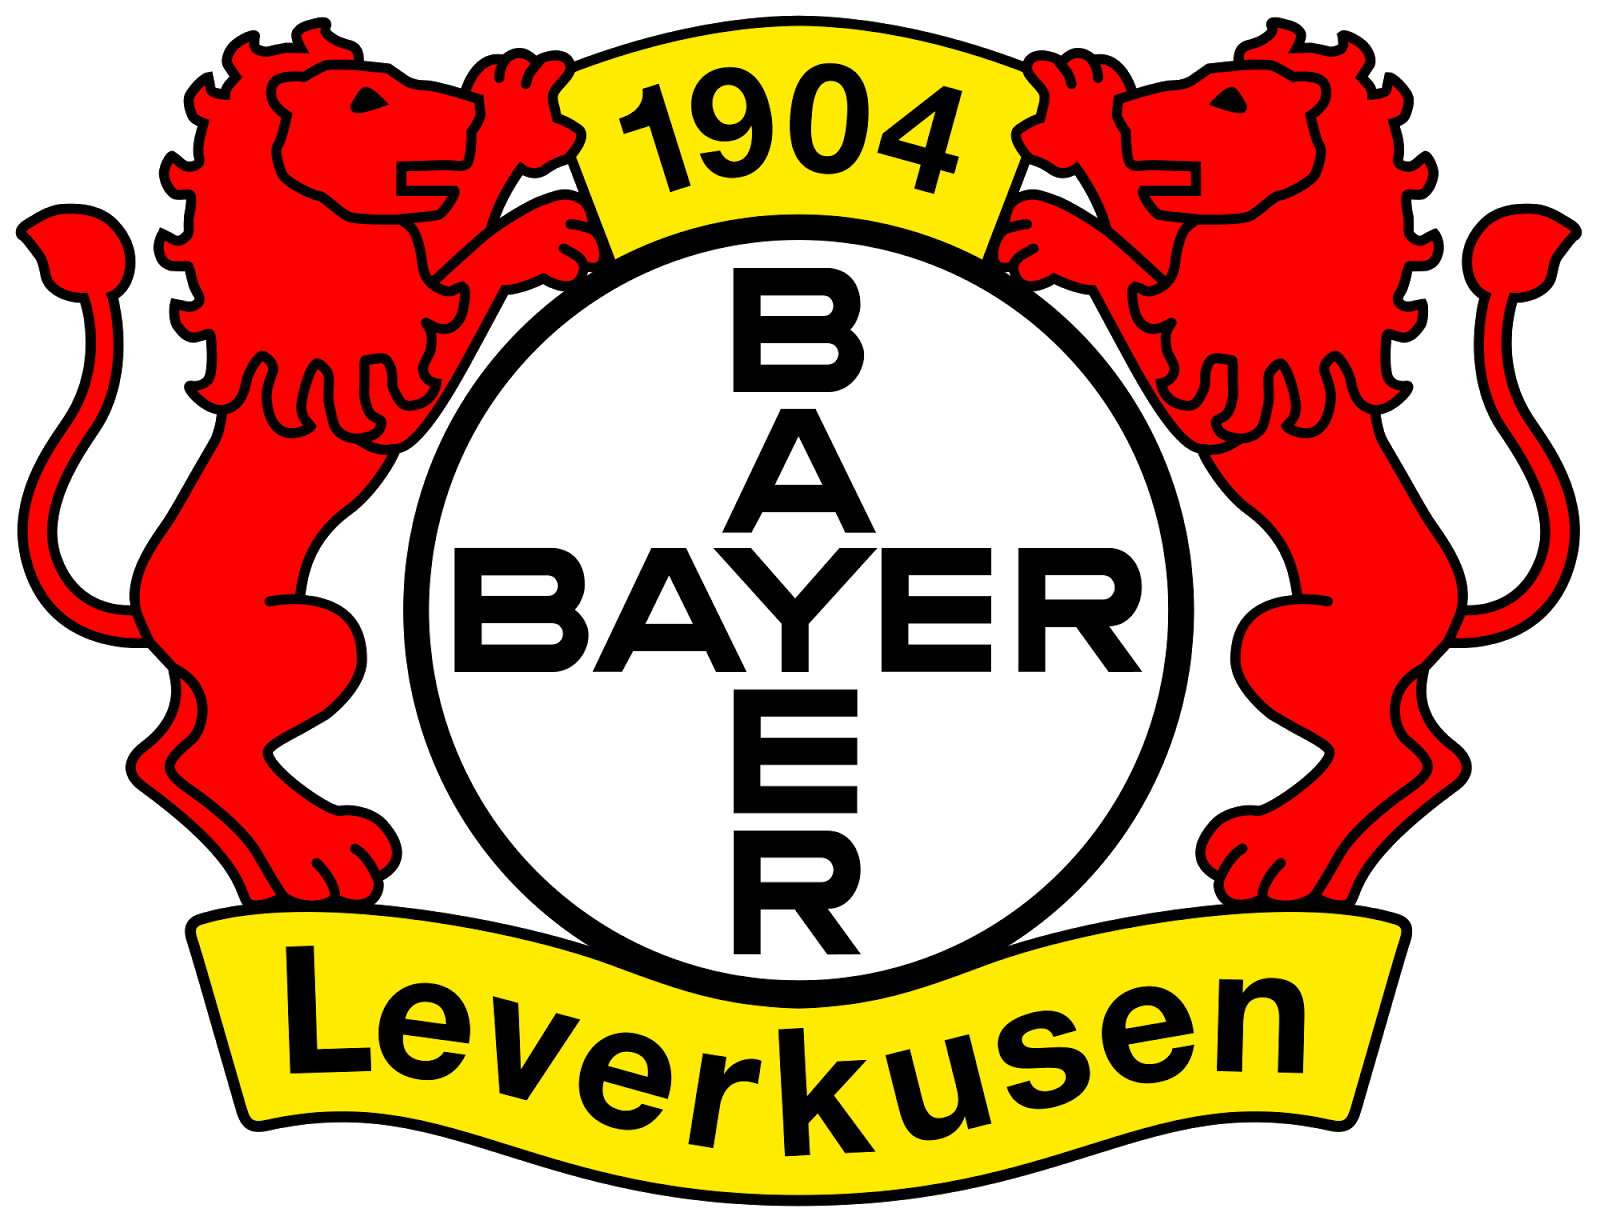 Download Bayer Leverkusen Wallpaper in HD For Desktop or Gadget